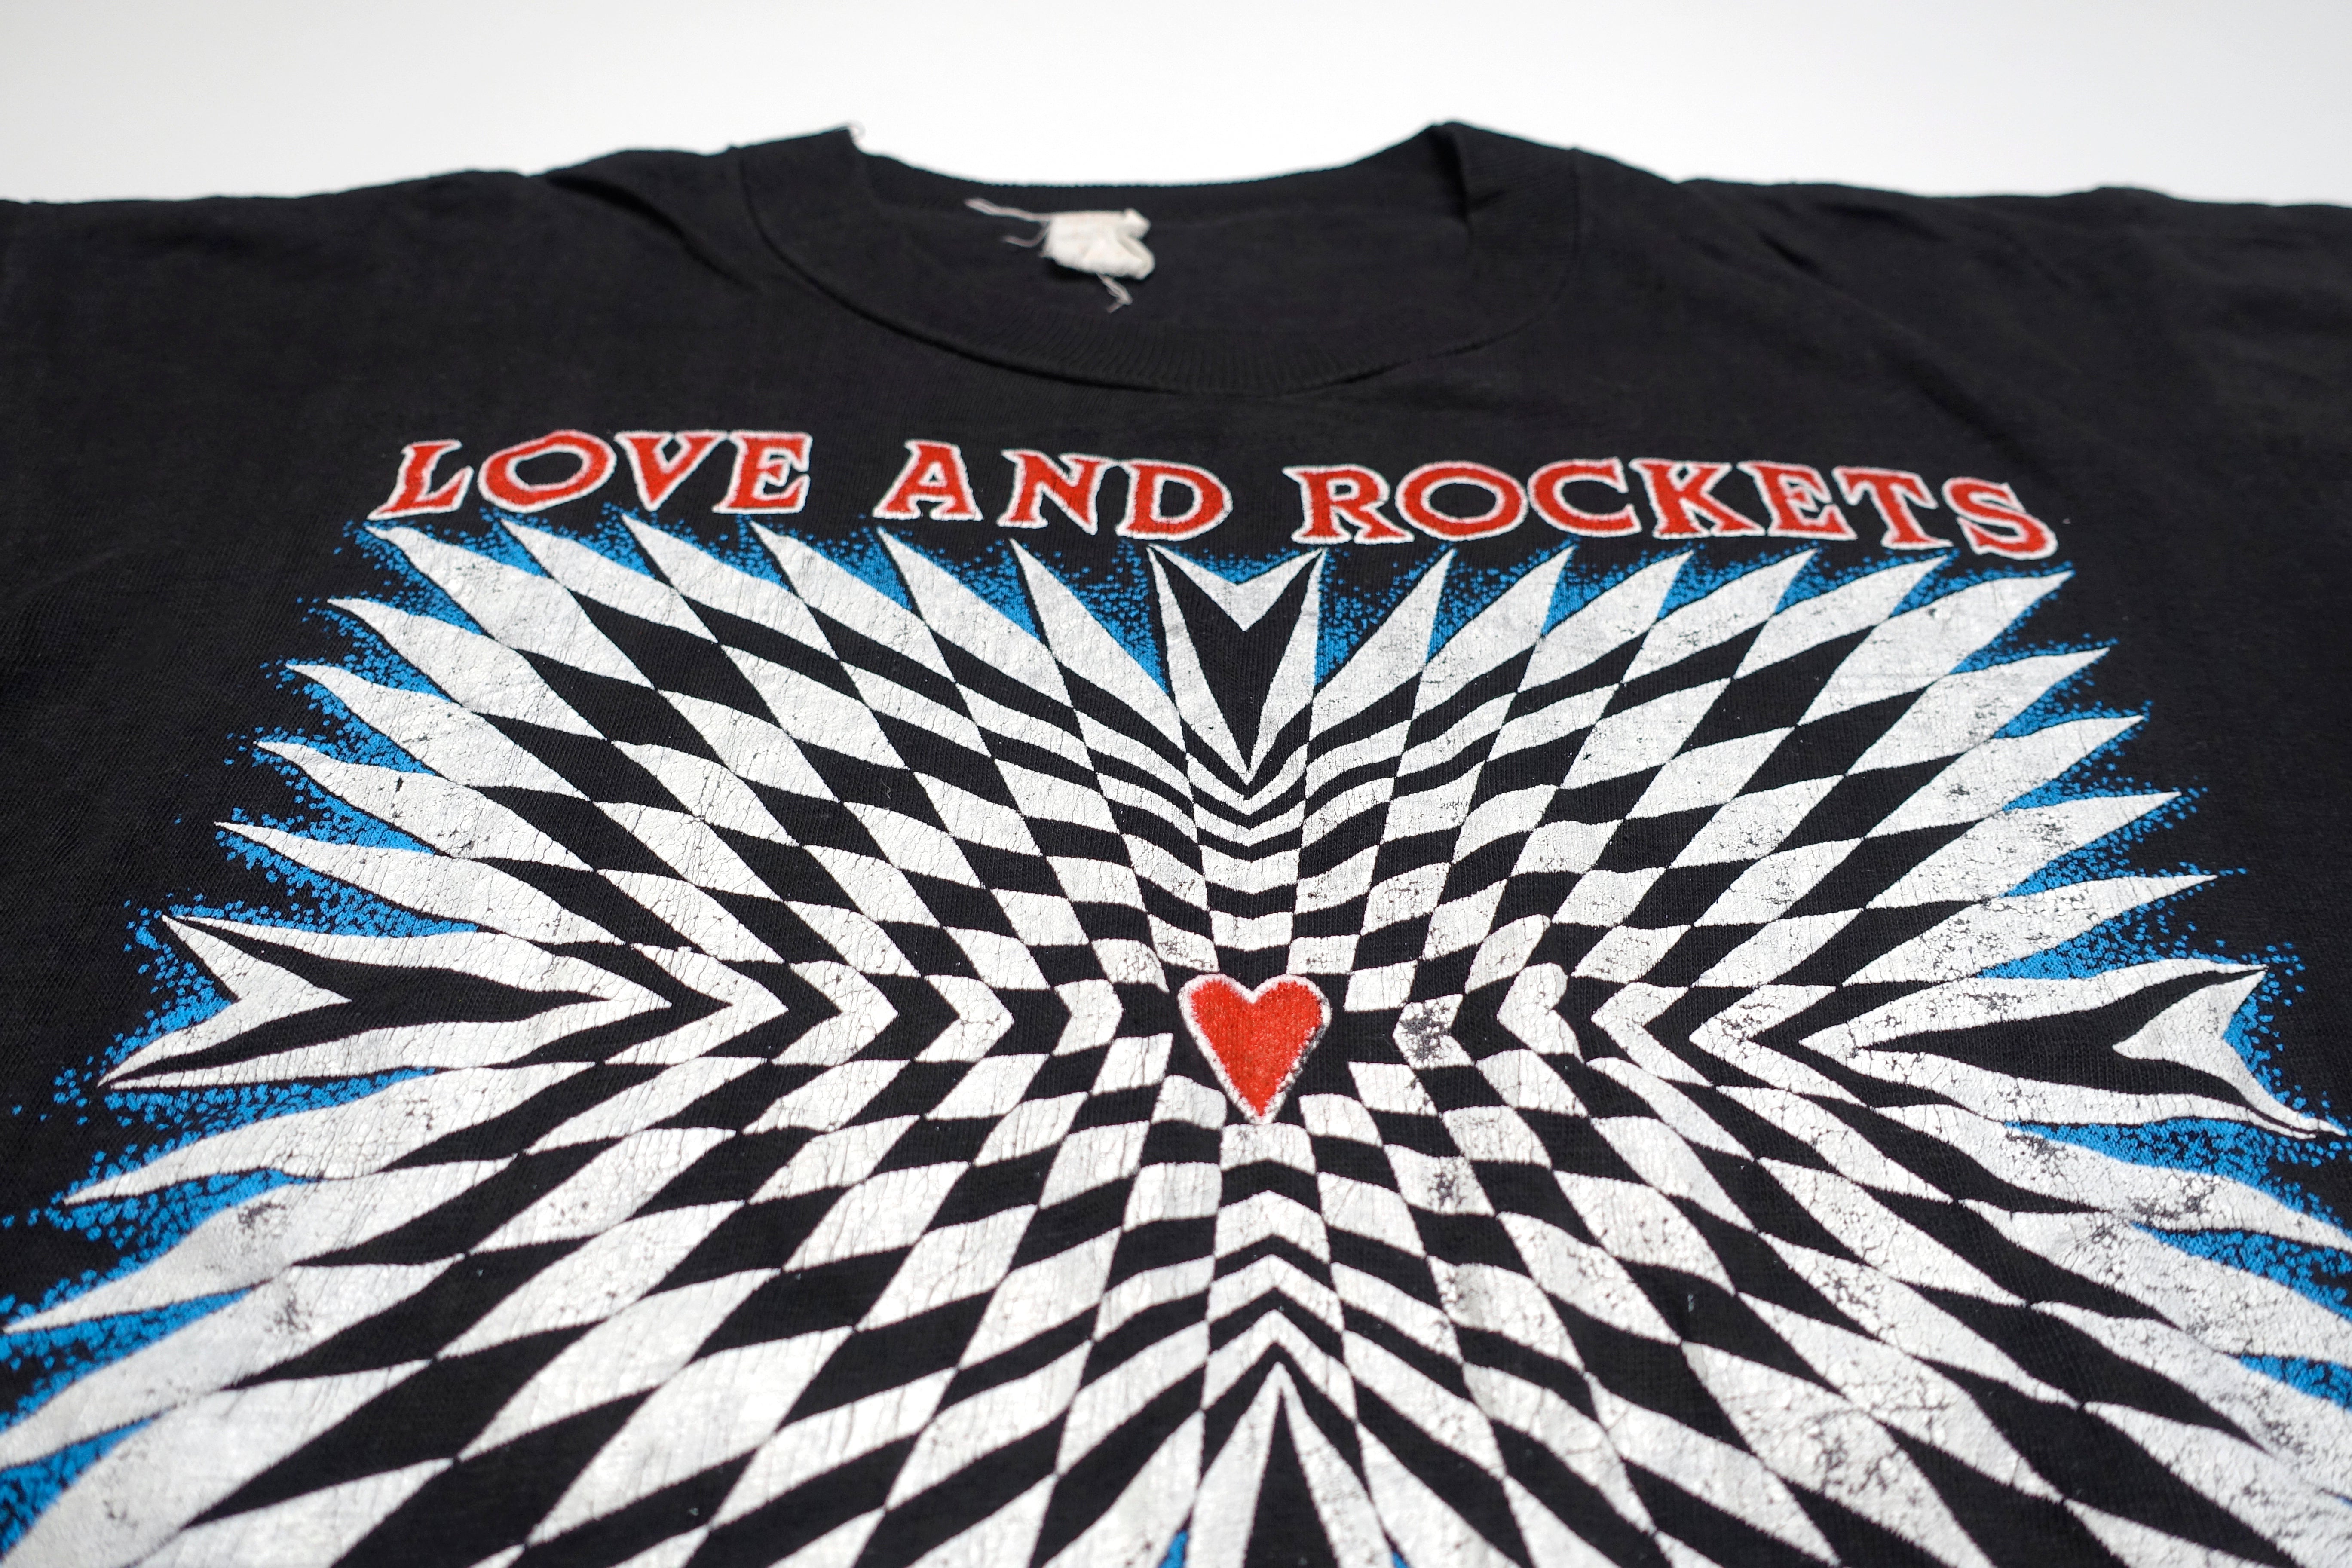 Love And Rockets ‎– 80's Bootleg Tour Shirt Size Large / Medium